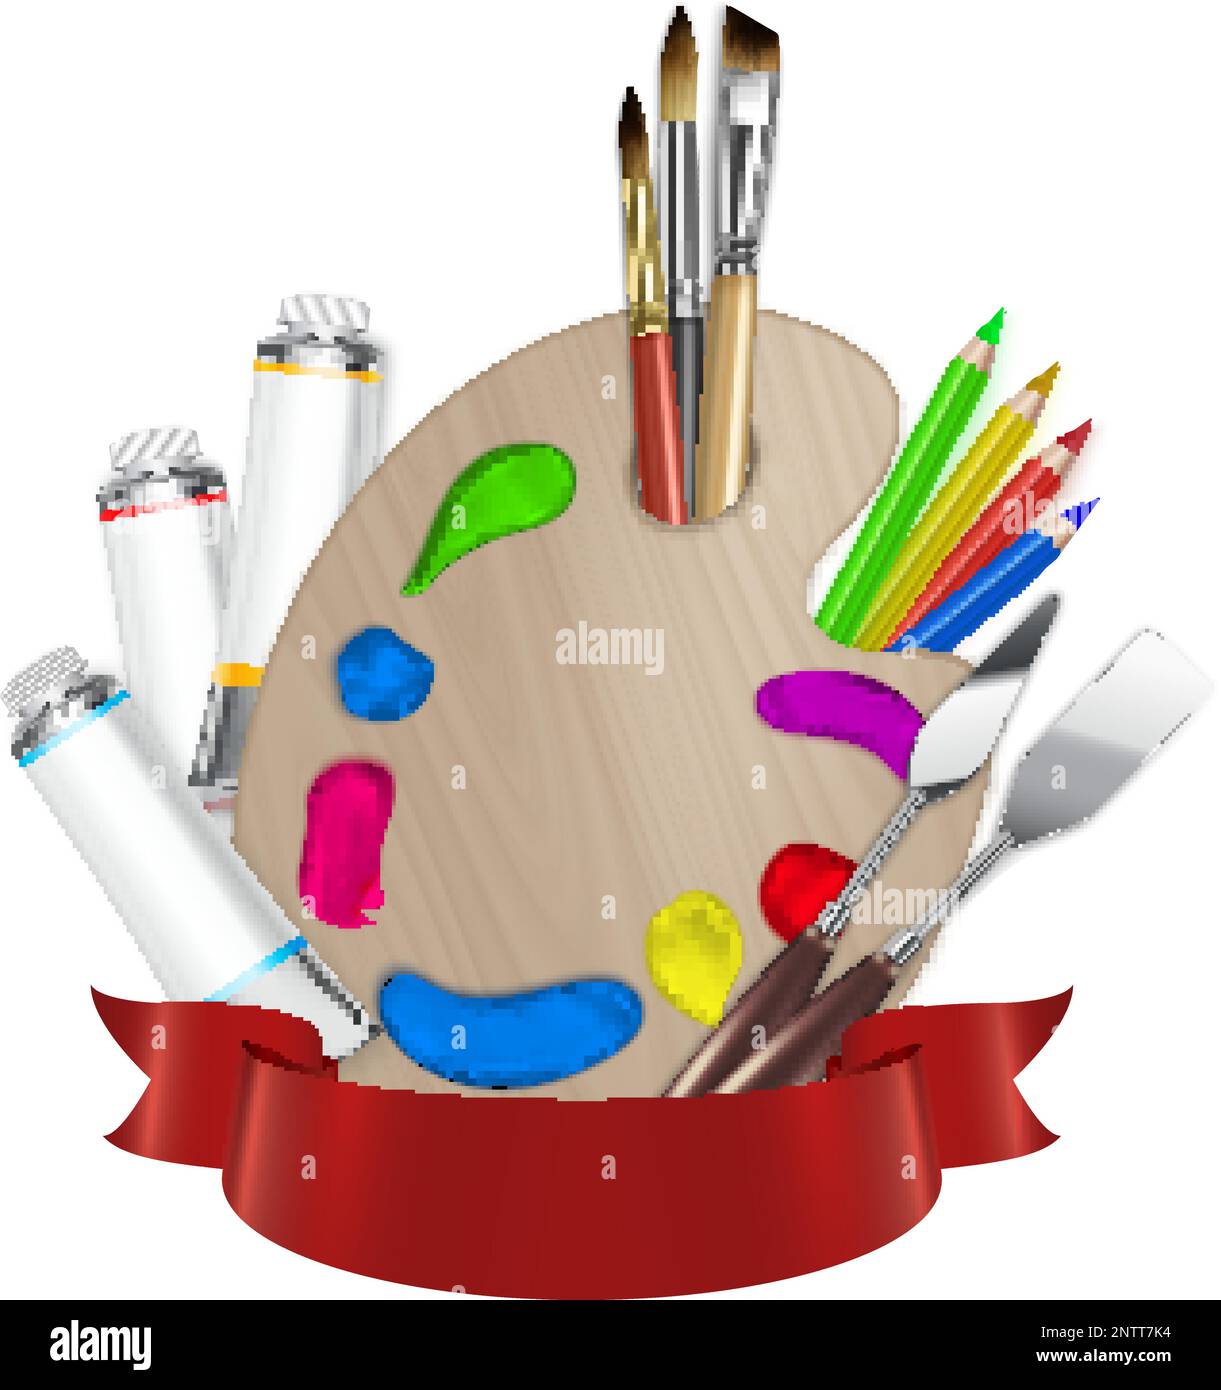 5Pcs Oil Painting Shovel Set Painting Mixing Scraper Artist tool